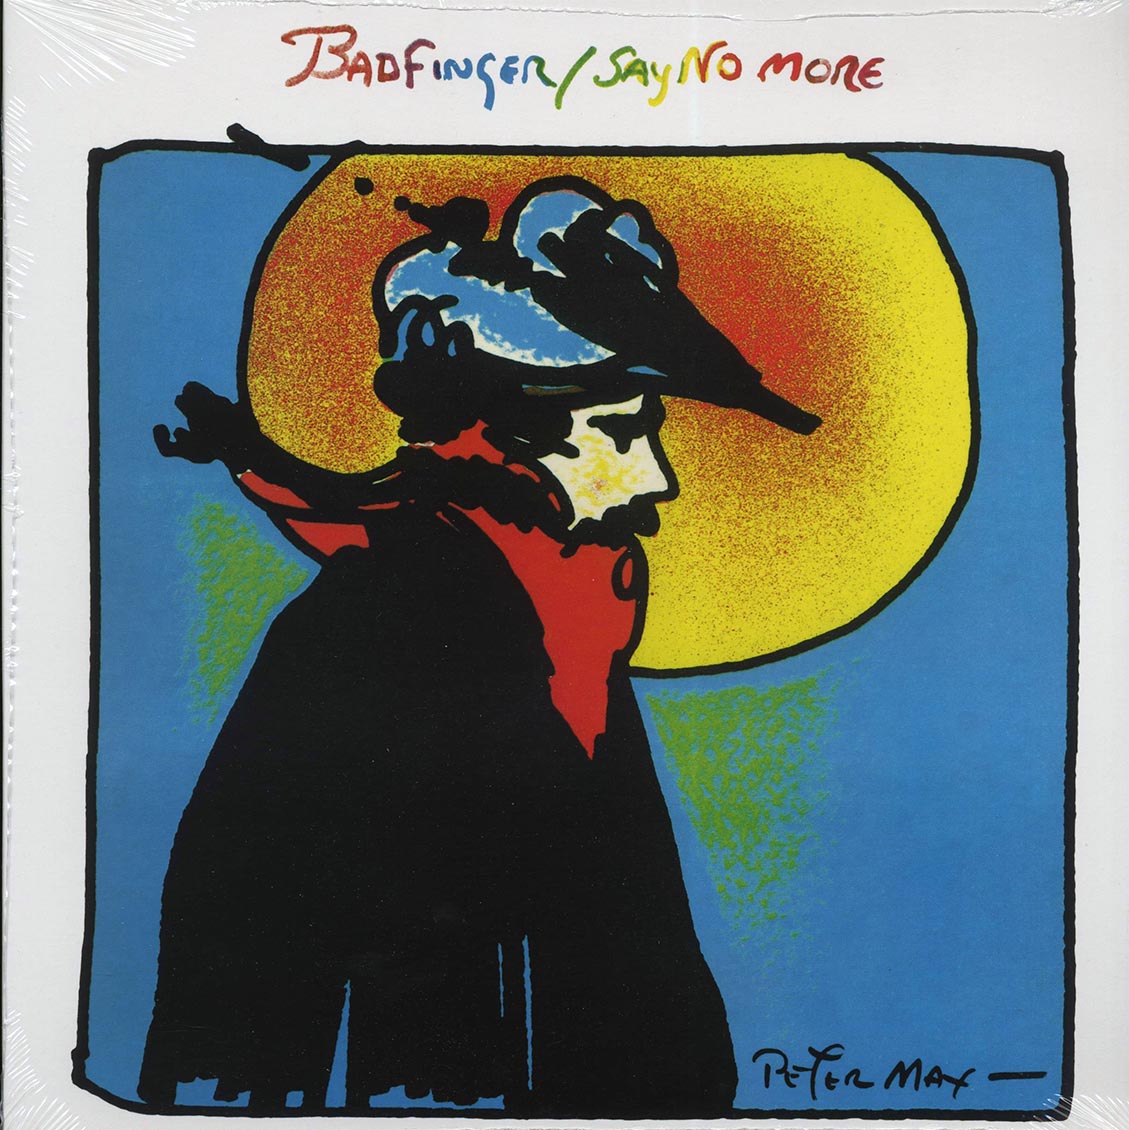 Badfinger - Say No More - Vinyl LP